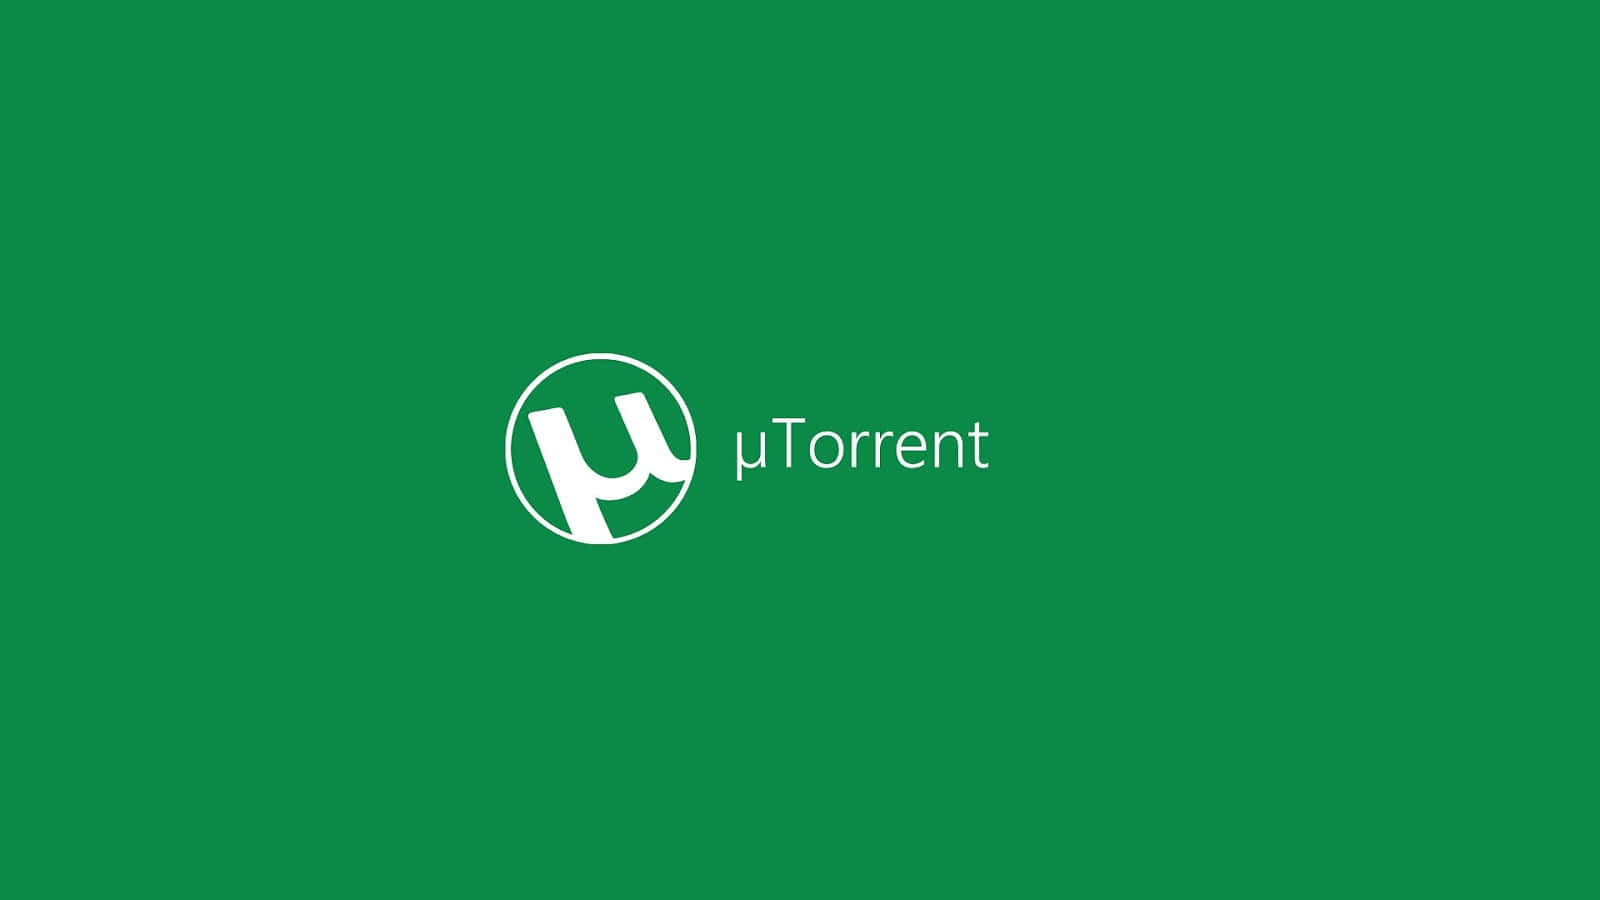 Utorrent Logo On A Green Background Wallpaper